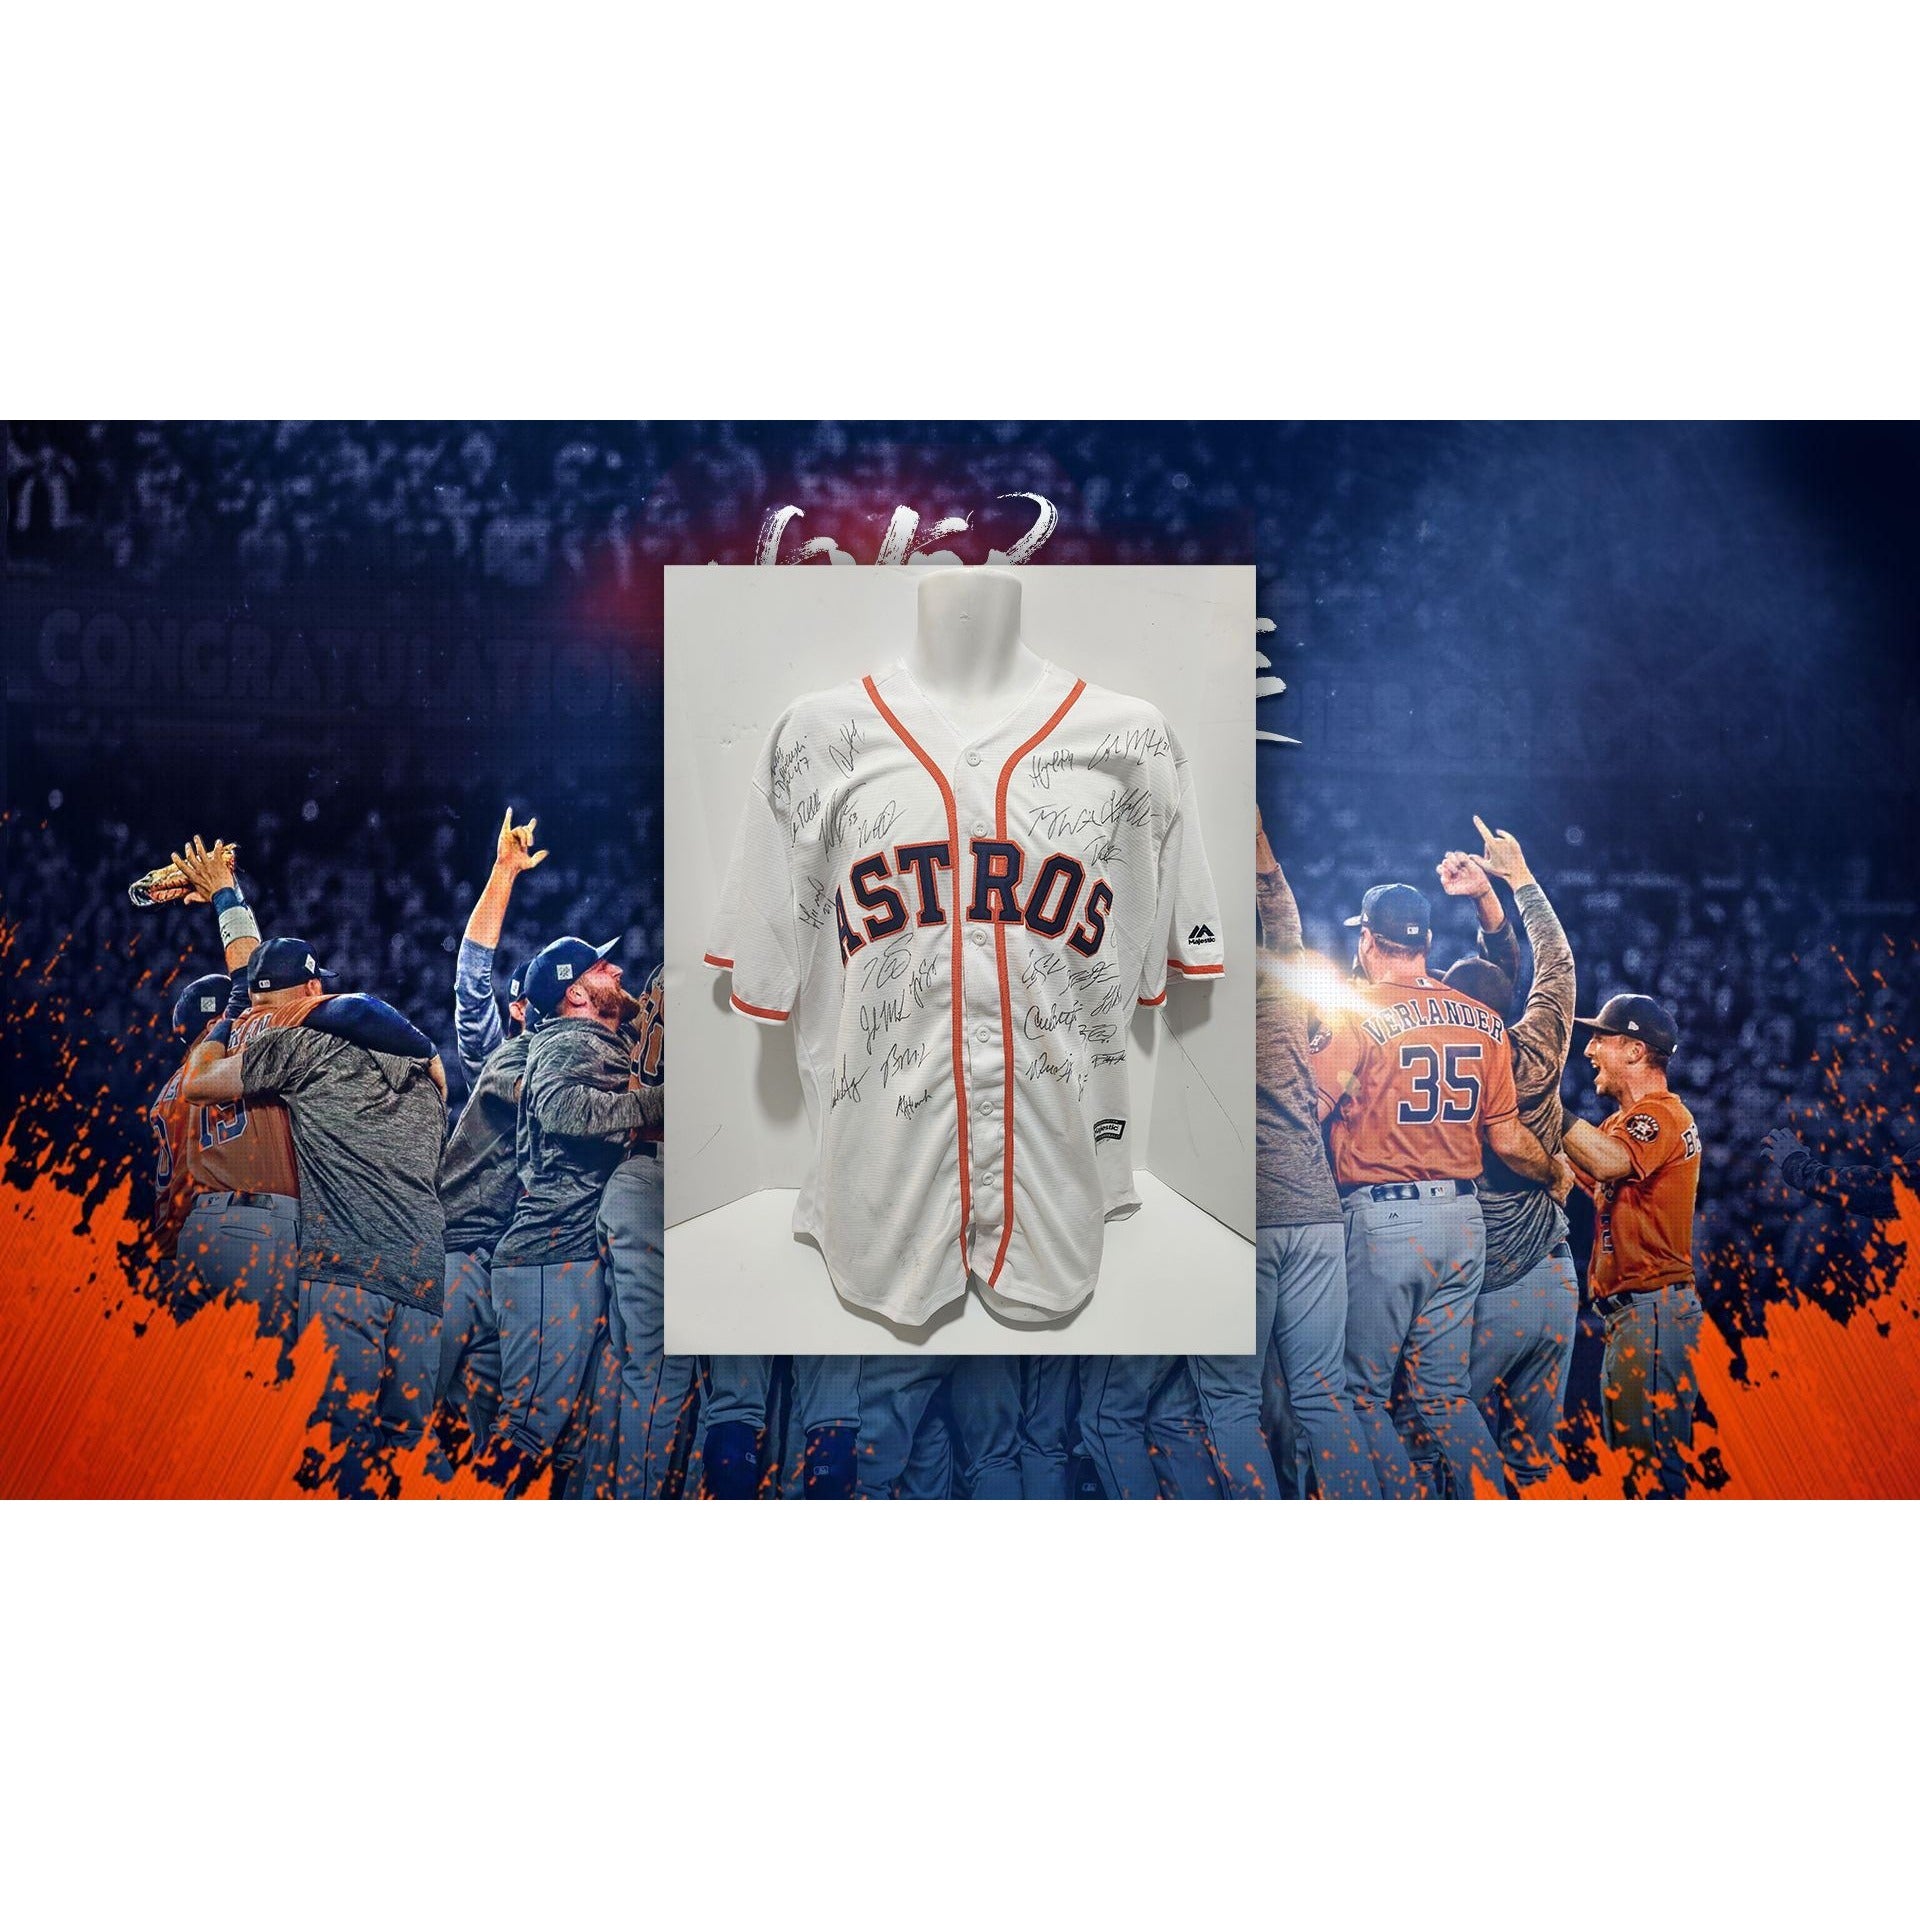 Sold at Auction: Jose Altuve, JOSE ALTUVE - Houston Astros WS Champ  signed Jersey